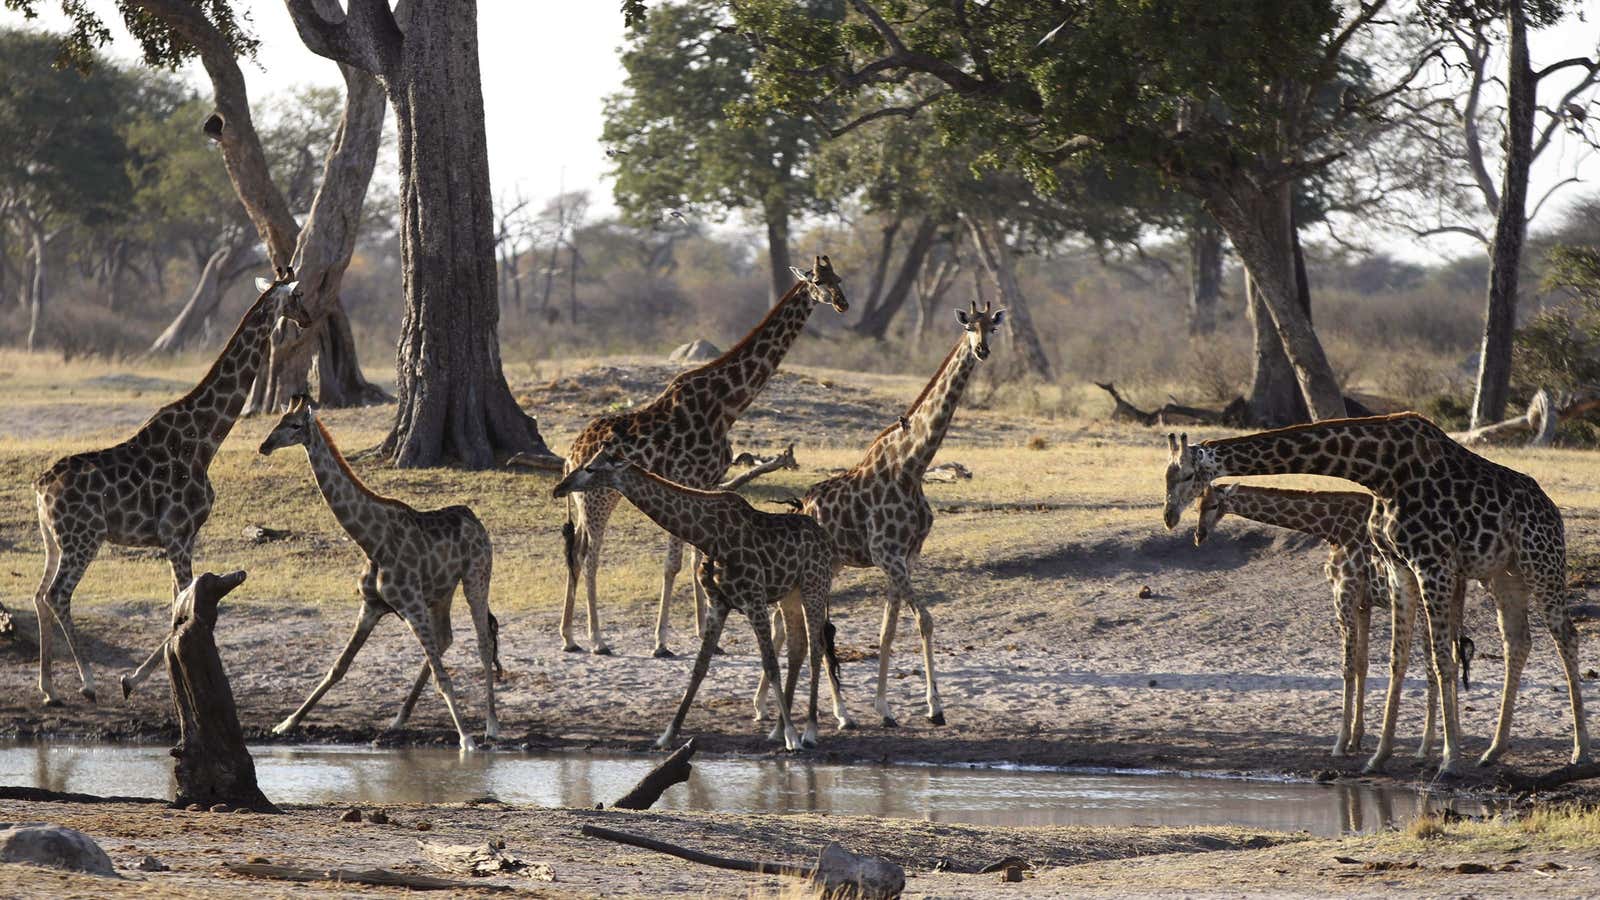 A drought has shrunken Zimbabwe’s watering holes.